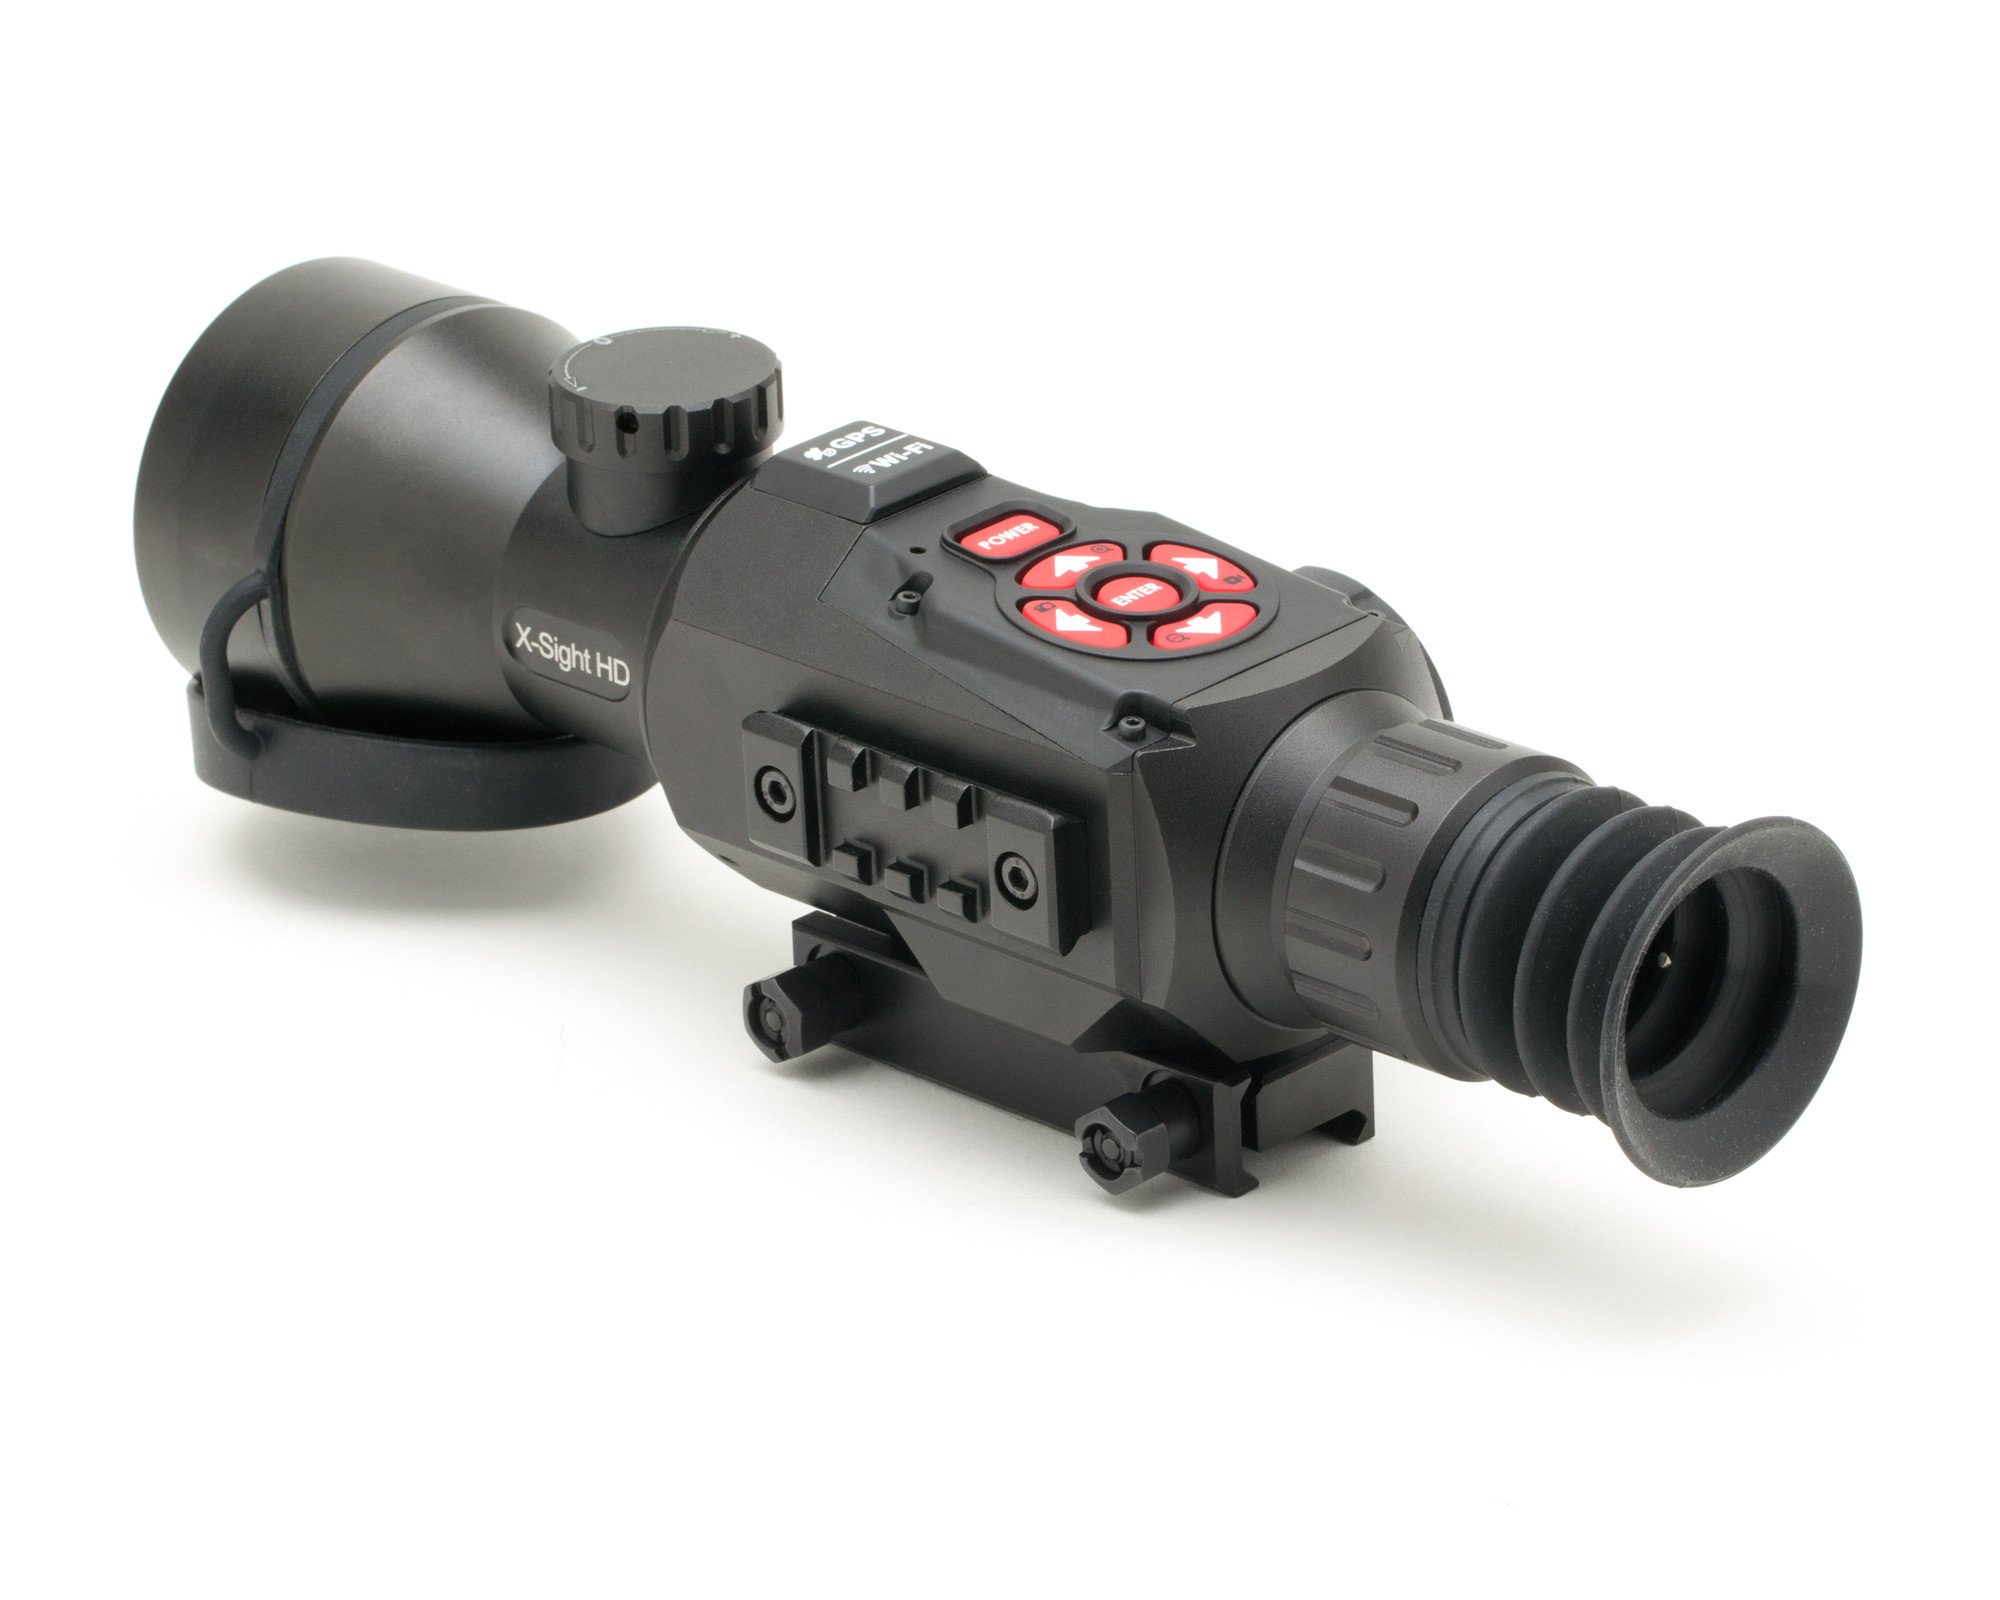 ATN X-Sight II Smart HD 5-20x Day & Night Vision Rifle Scope - Australian Tactical Precision